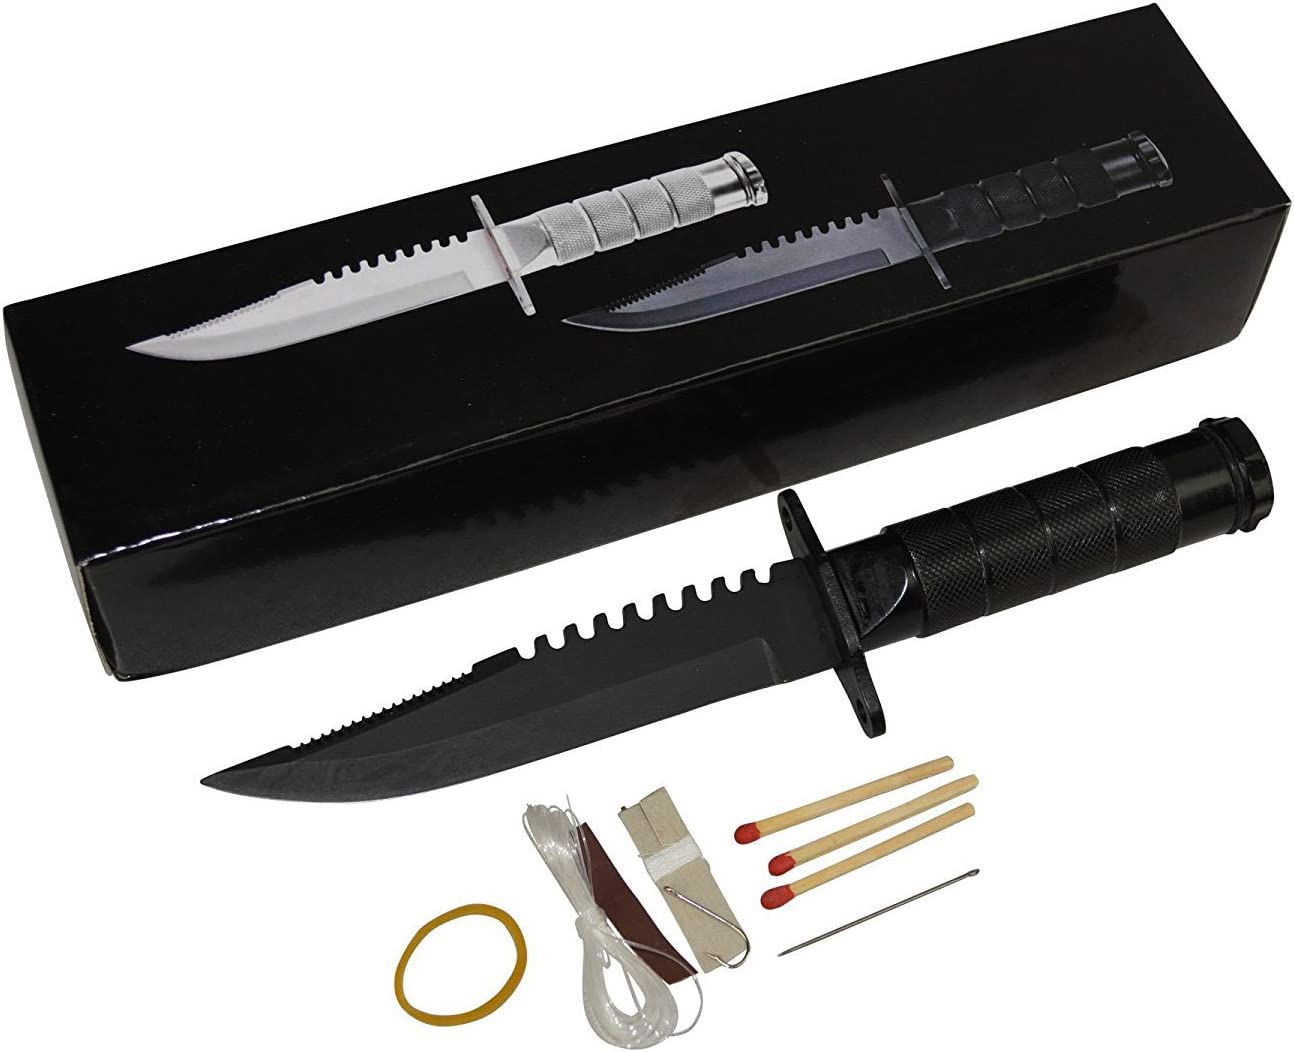 Snake Eye Tactical Black Serrated Blade Hunting Knife w/ Survival Kit & Sheath Camping Fishing Matches Fish hooks Needles Compass